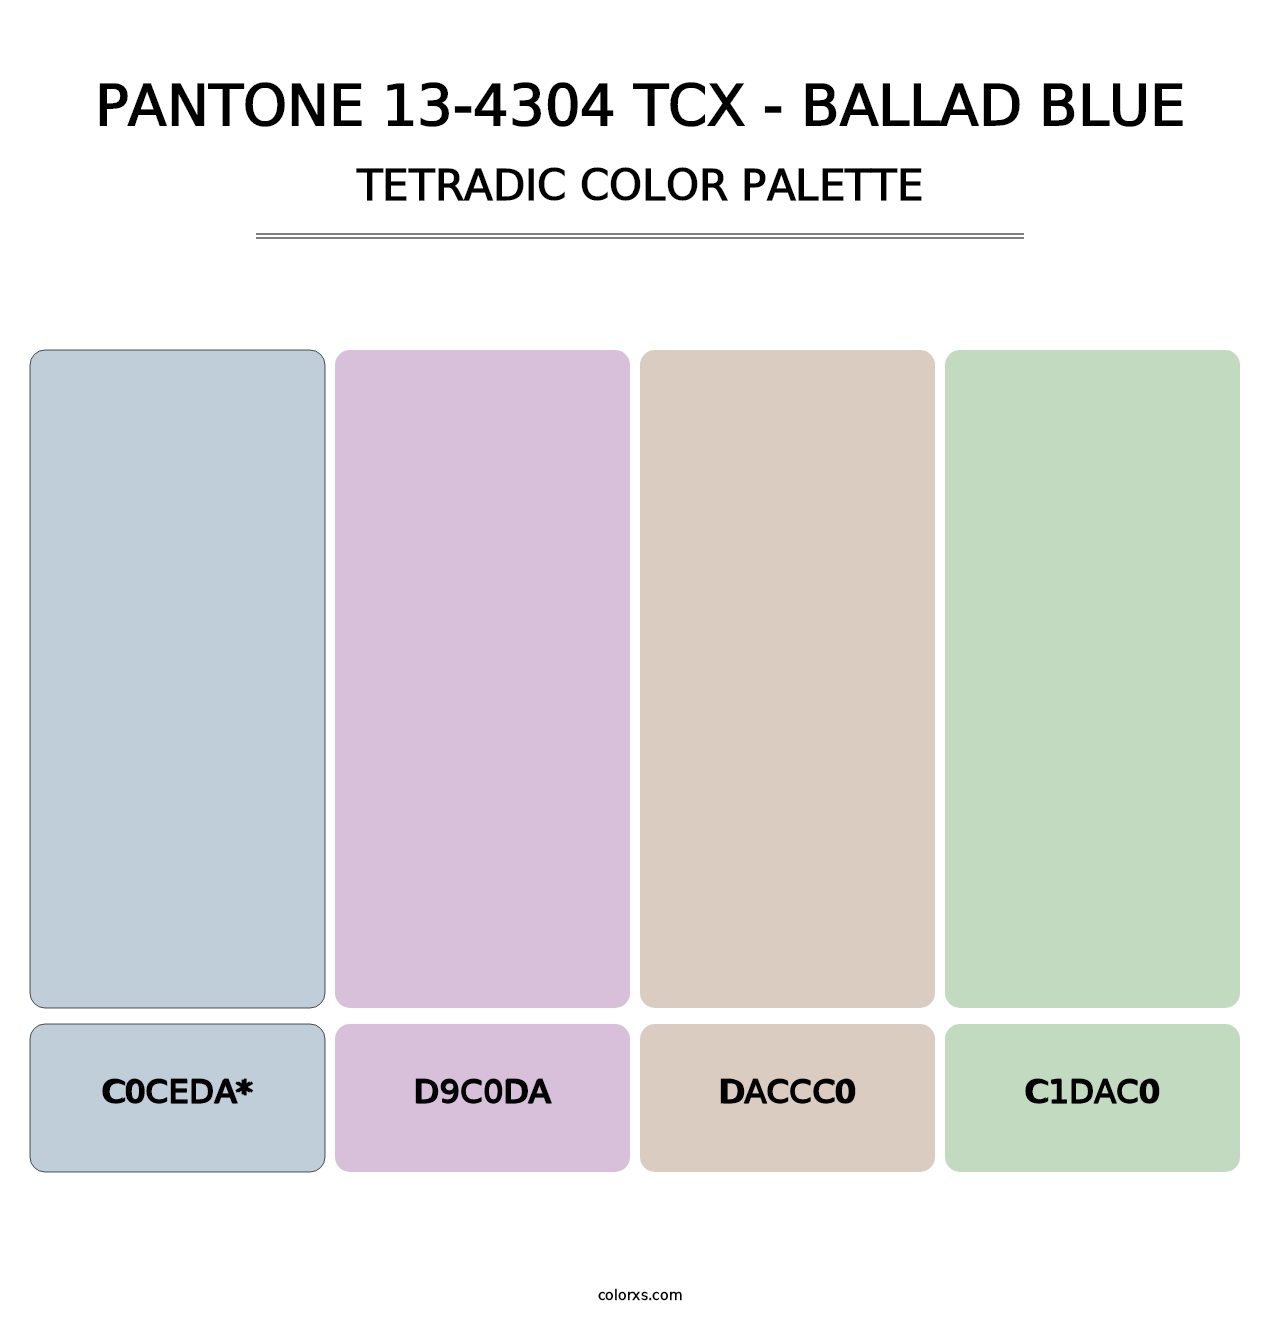 PANTONE 13-4304 TCX - Ballad Blue - Tetradic Color Palette